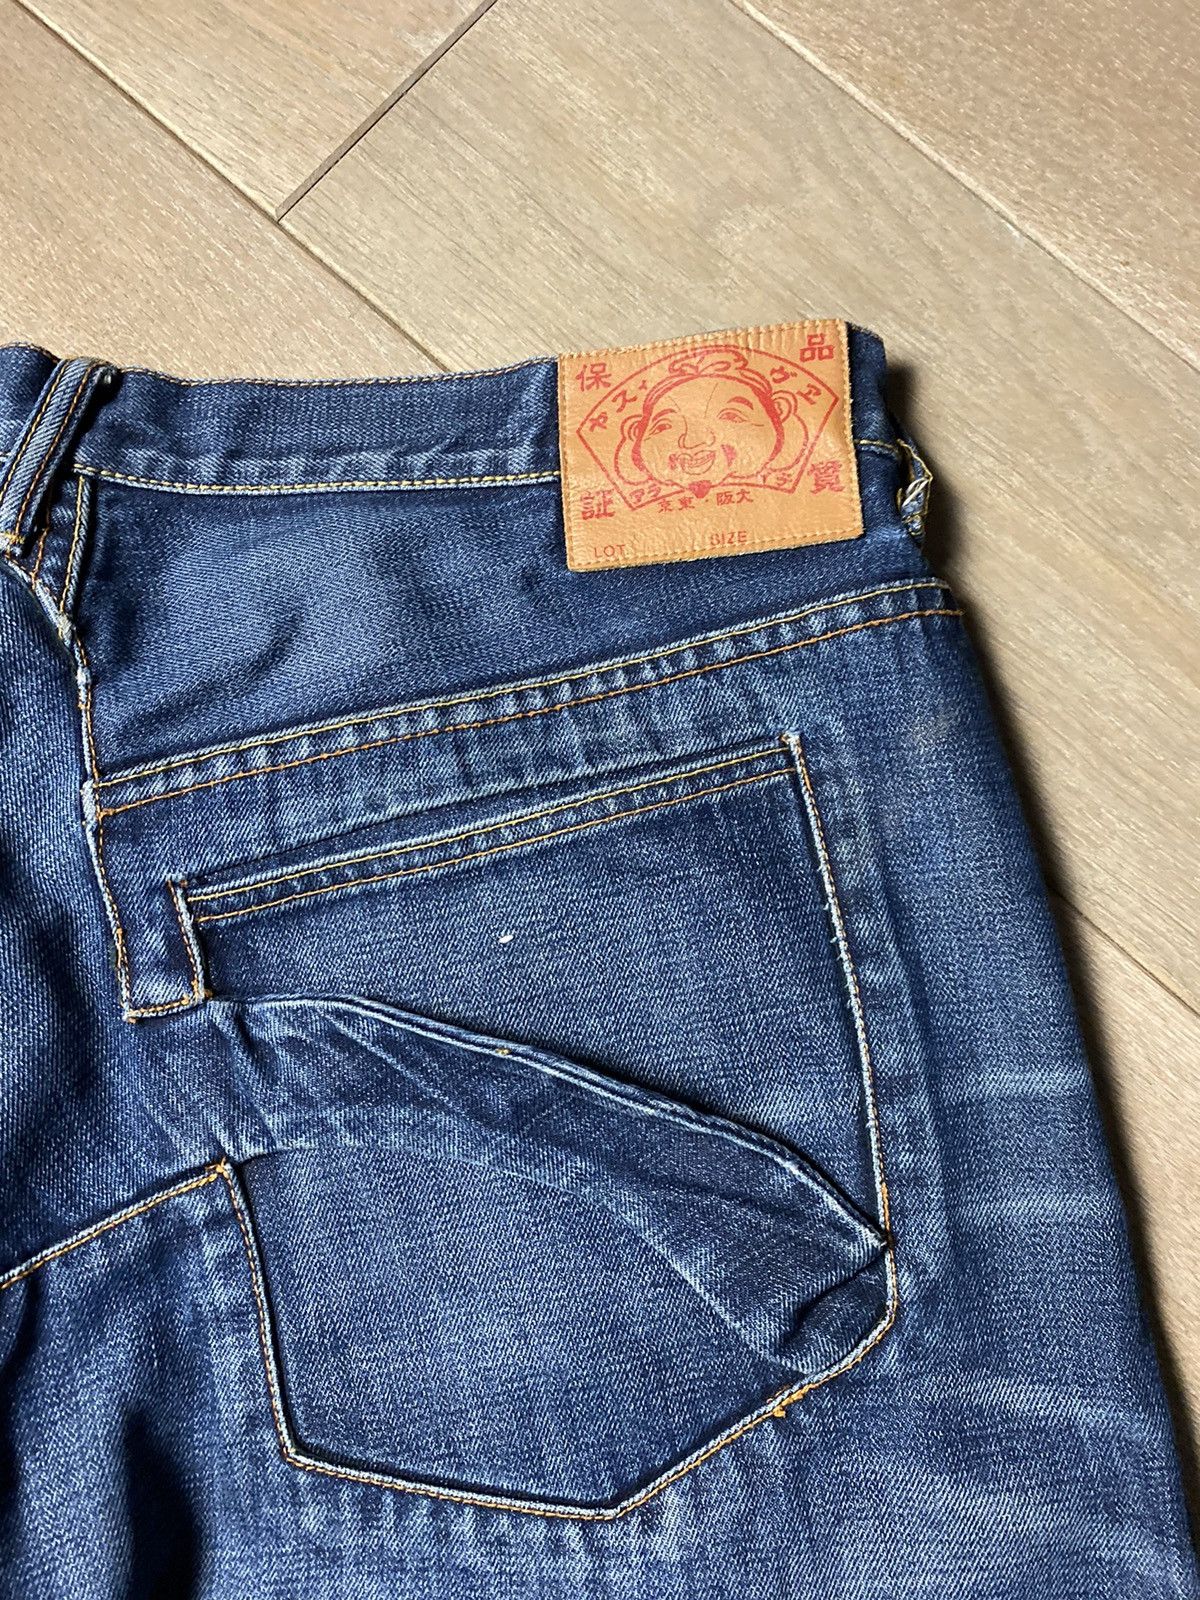 Vintage Evisu Japan vintage blue jeans denim pants big seagull logo Size US 38 / EU 54 - 3 Thumbnail